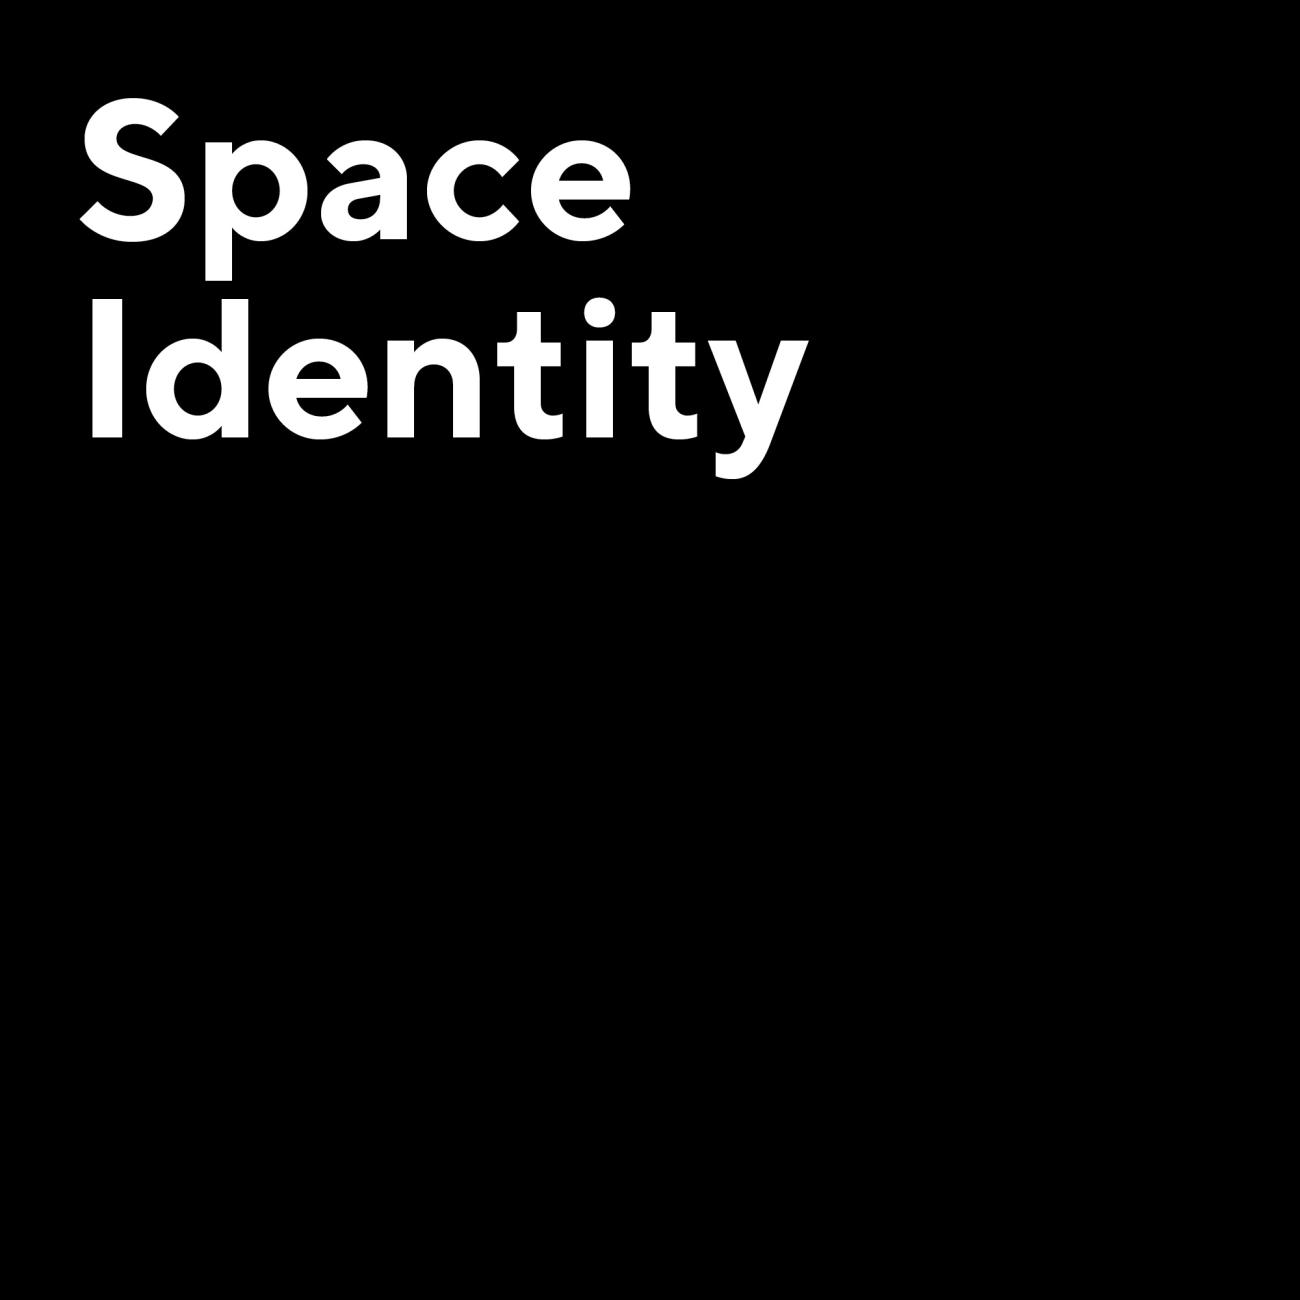 Space Identity